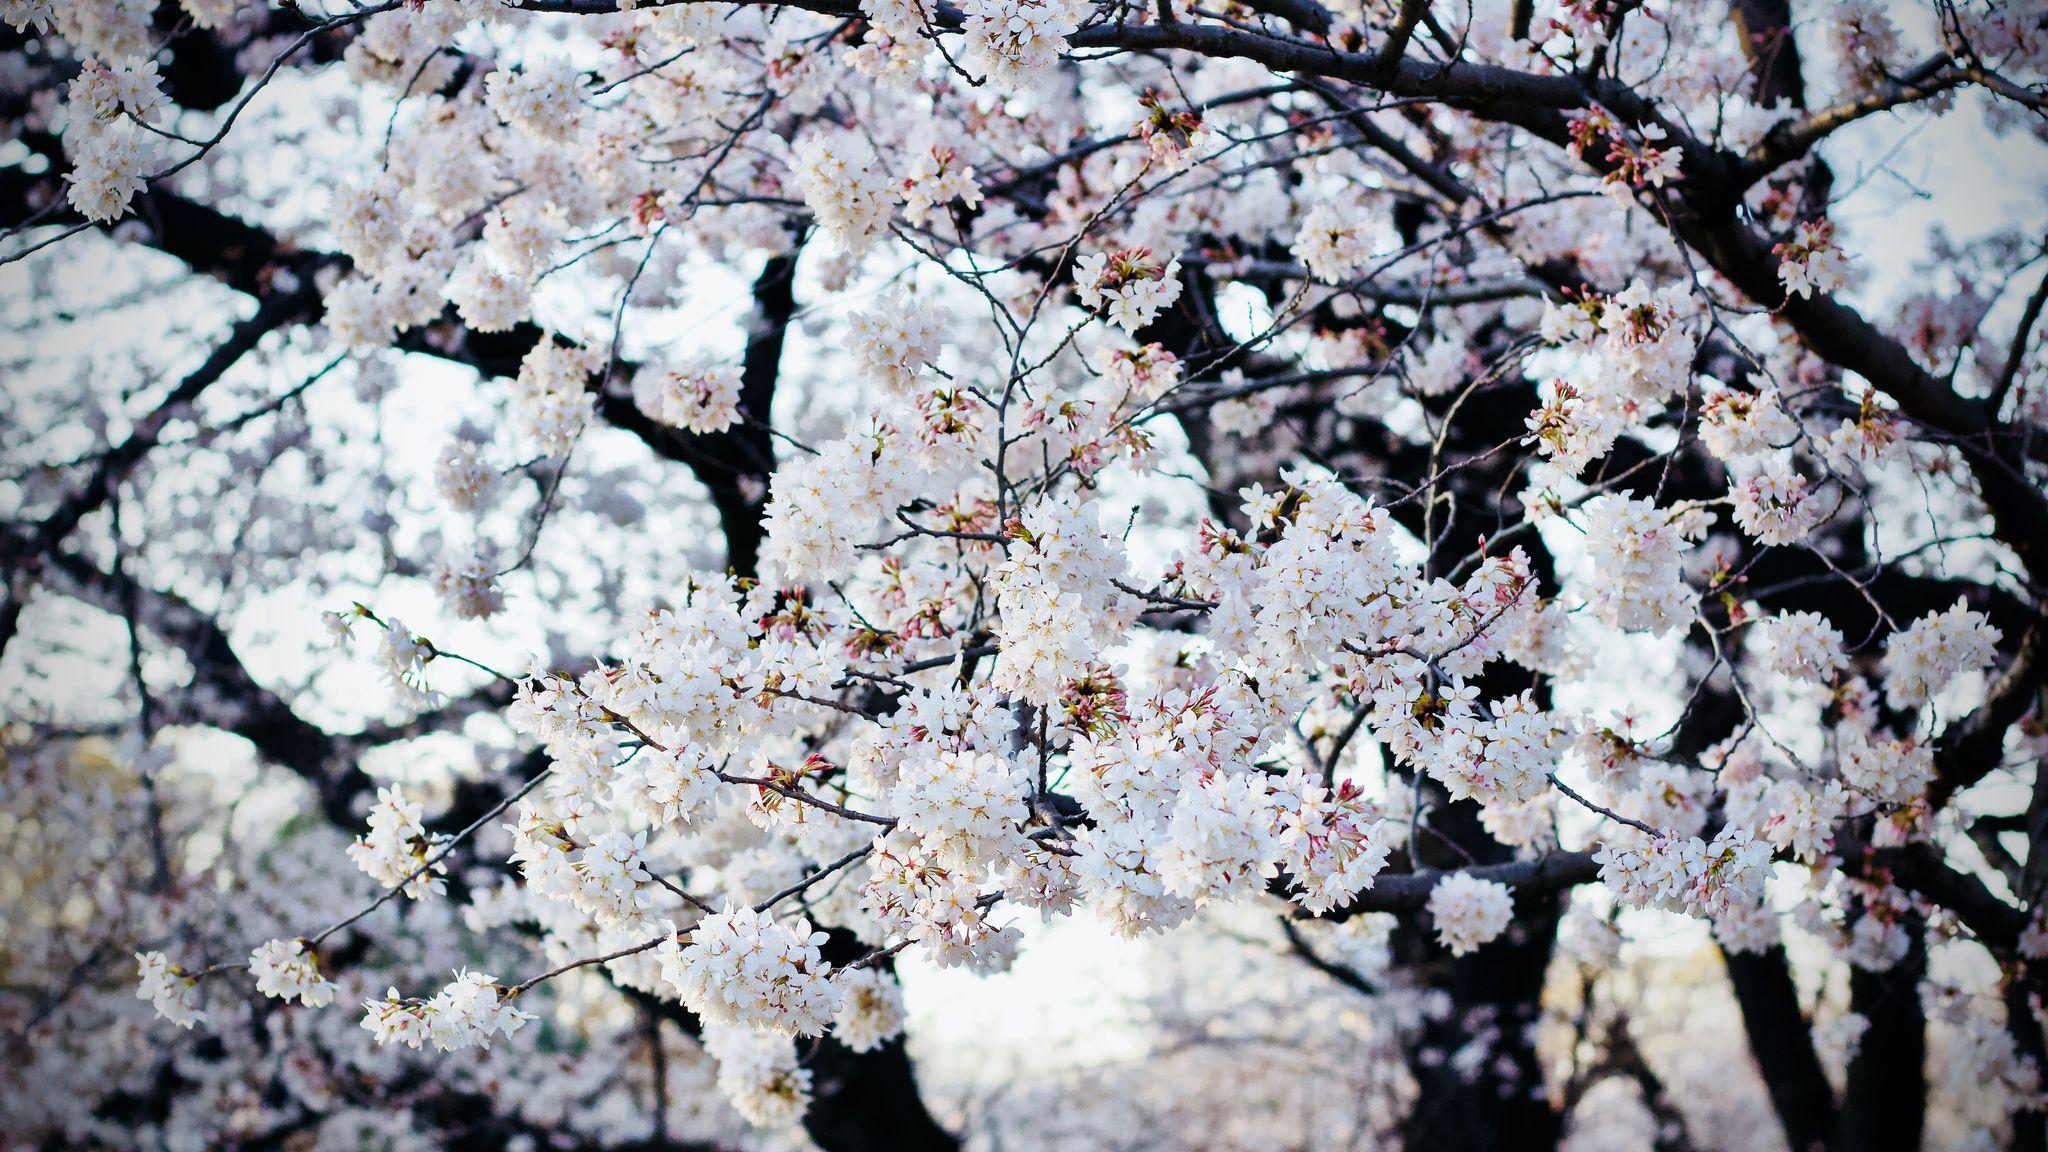 Cherry blossom - symbolic image